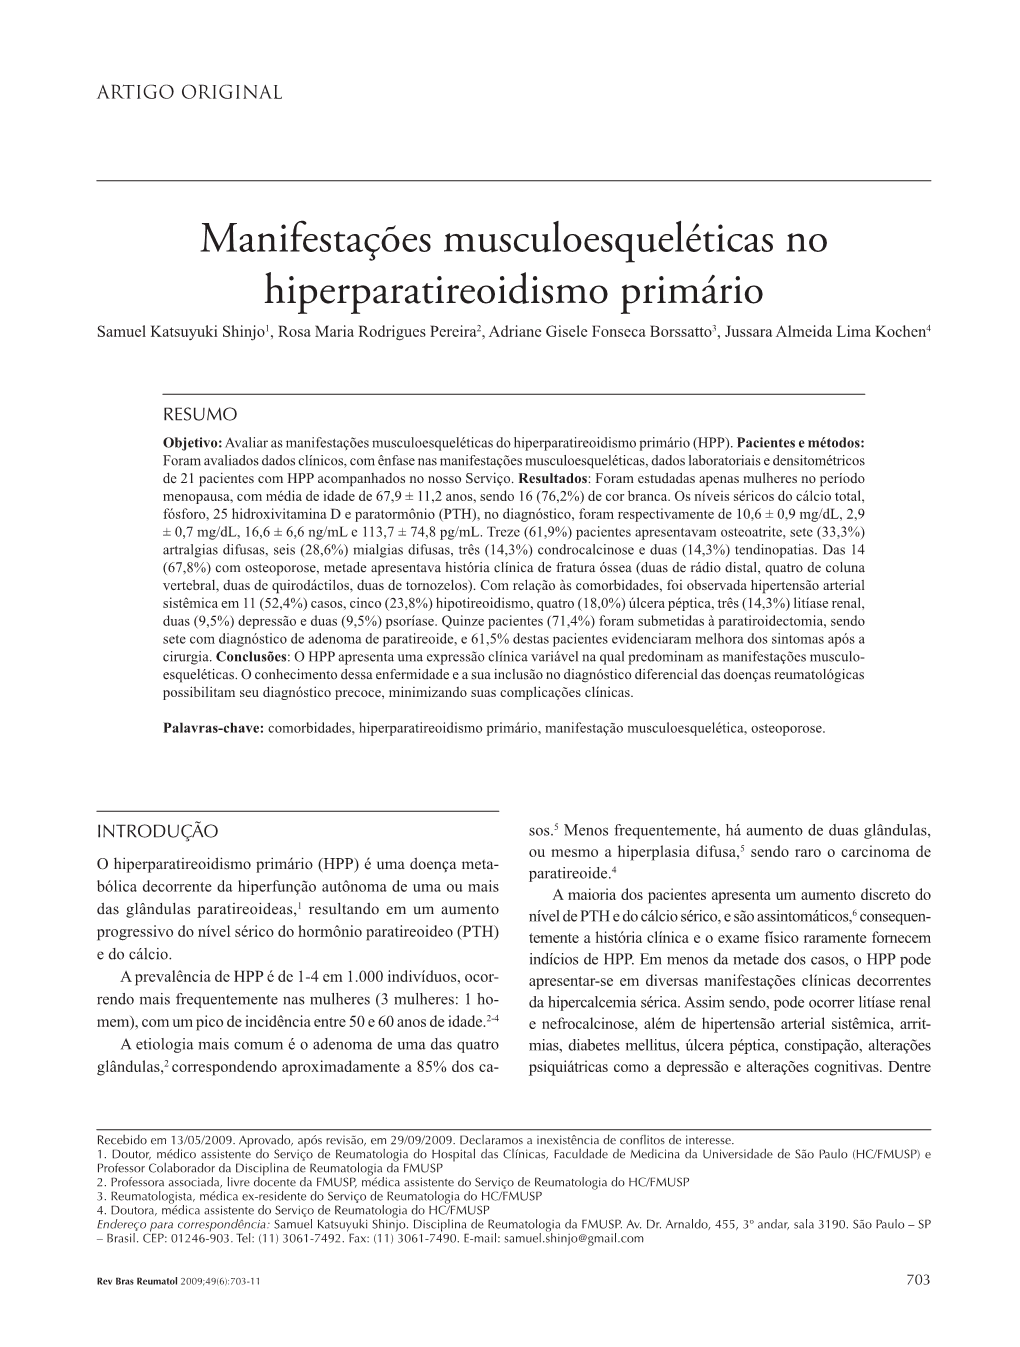 Musculoskeletal Manifestations in Primary Hyperparathyroidism